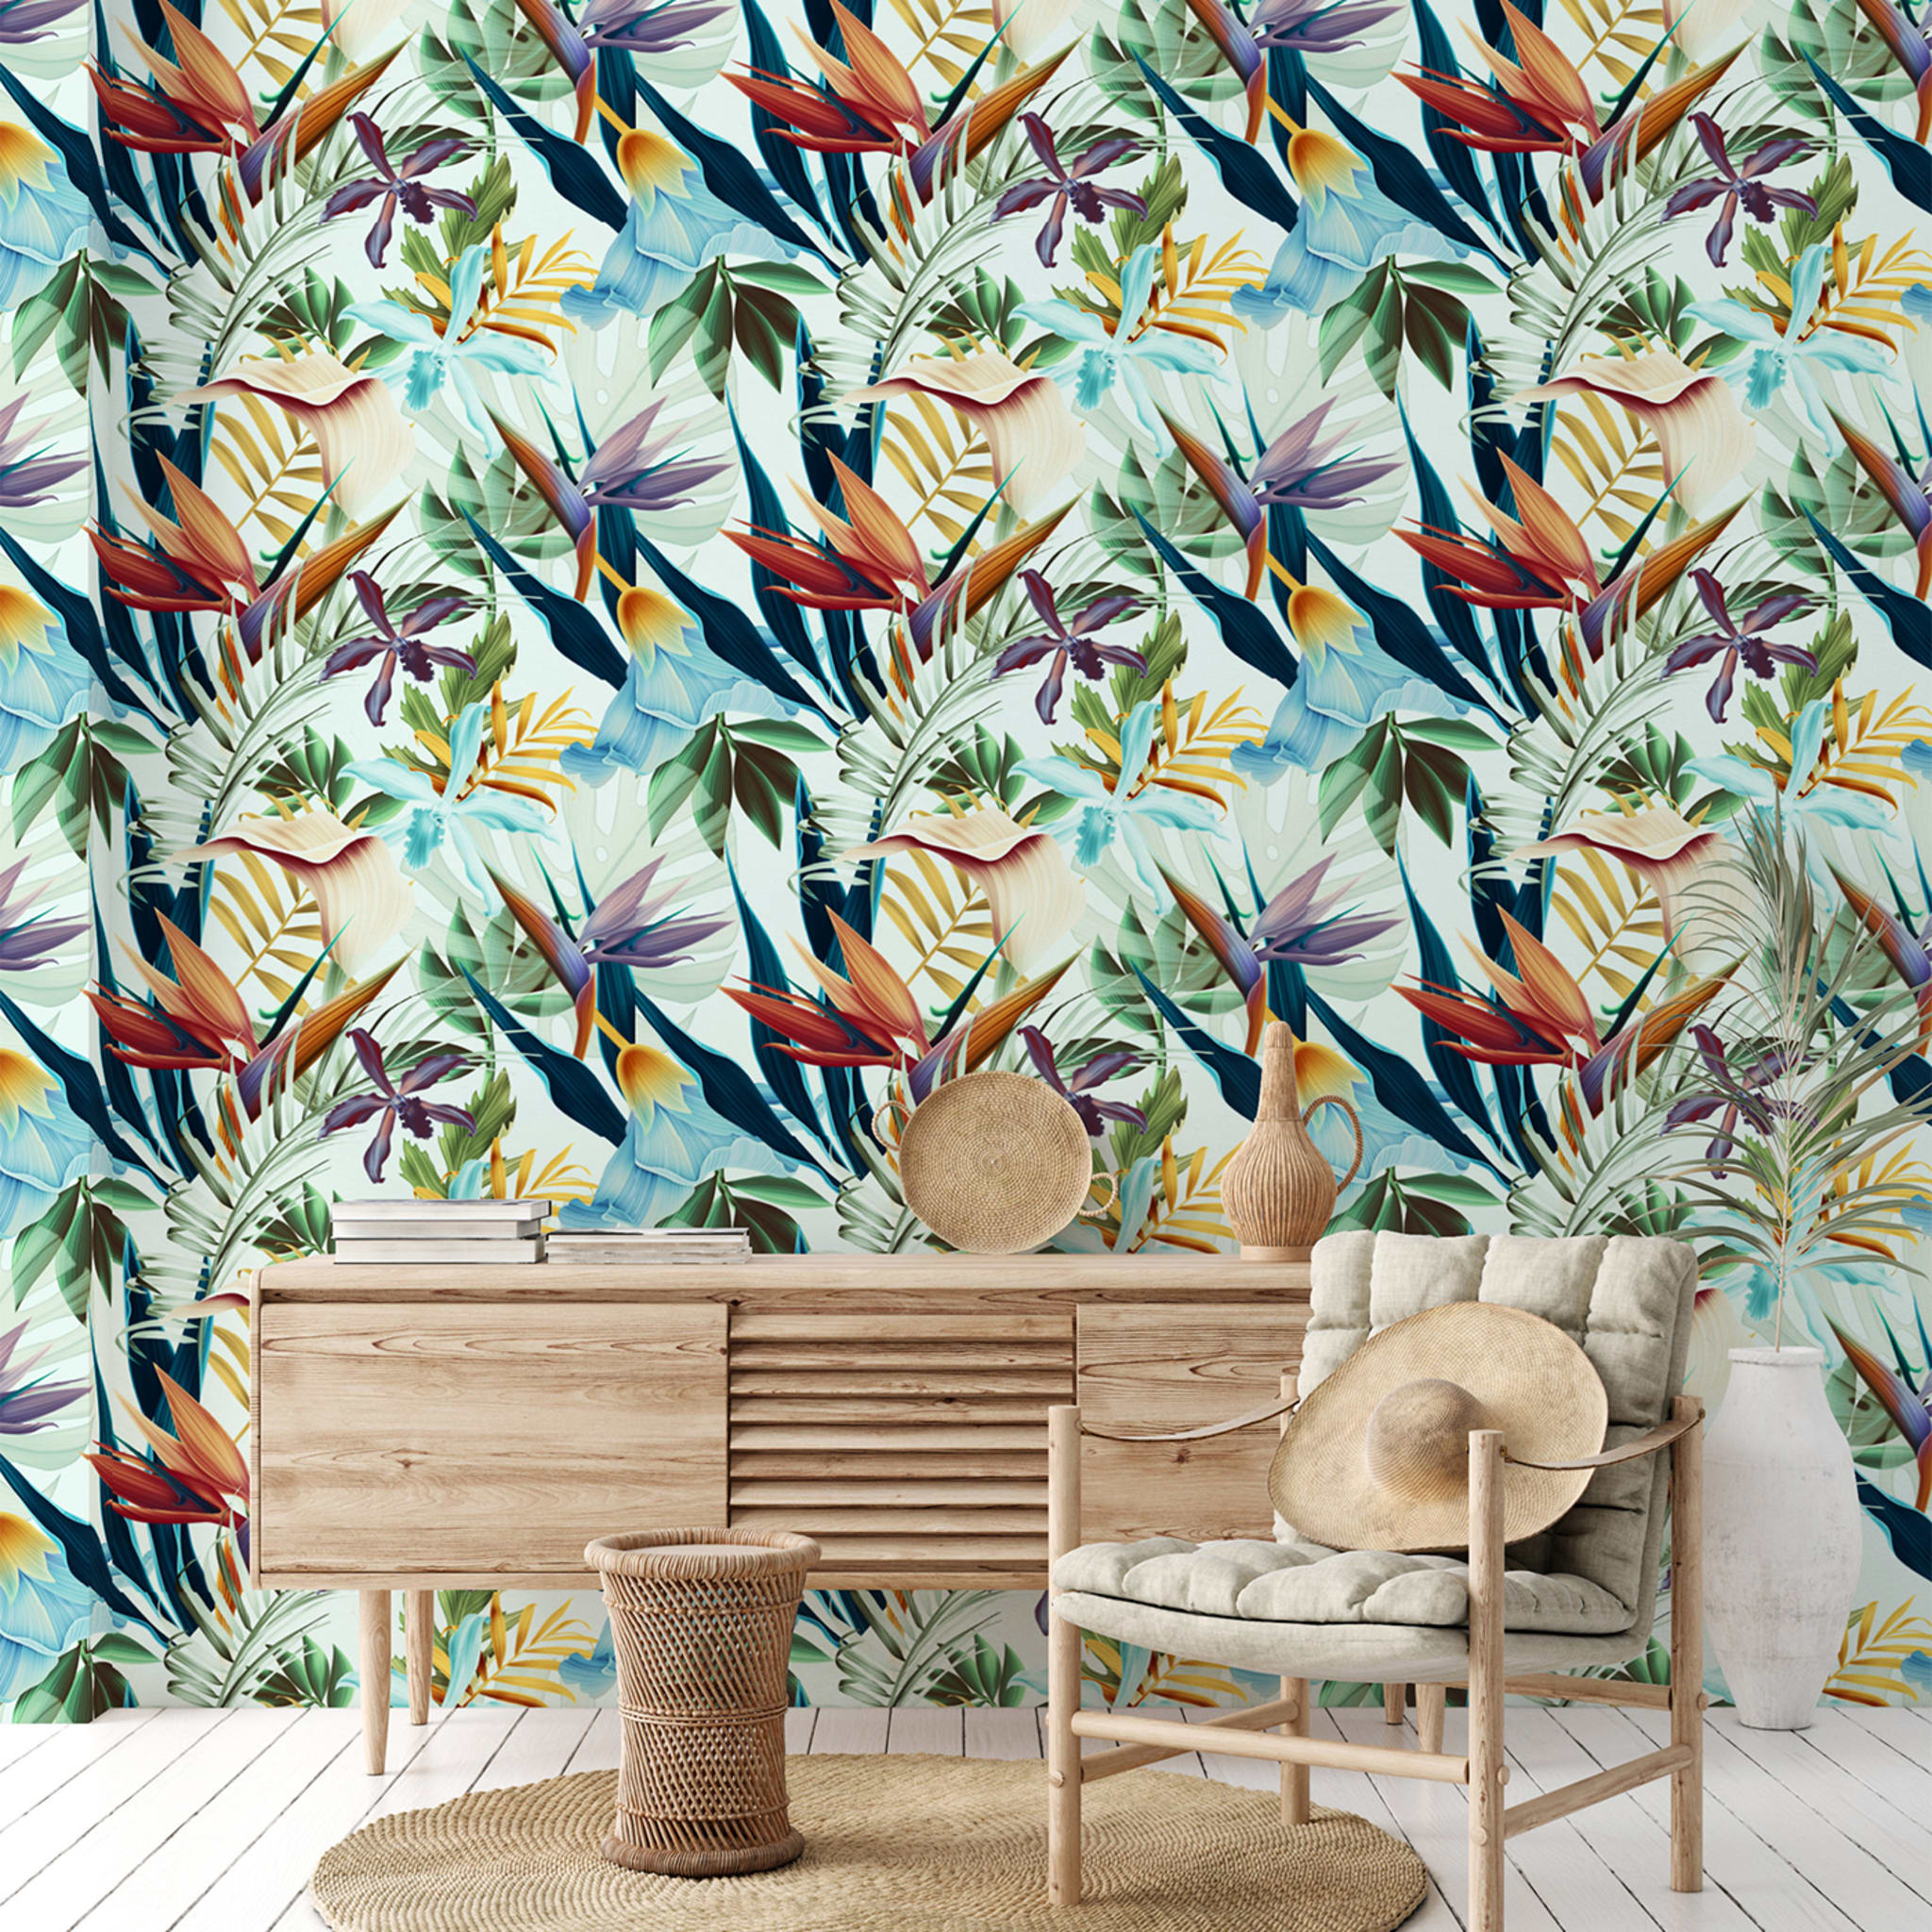 Bali Wallpaper with Tropical Print - Alternative view 3